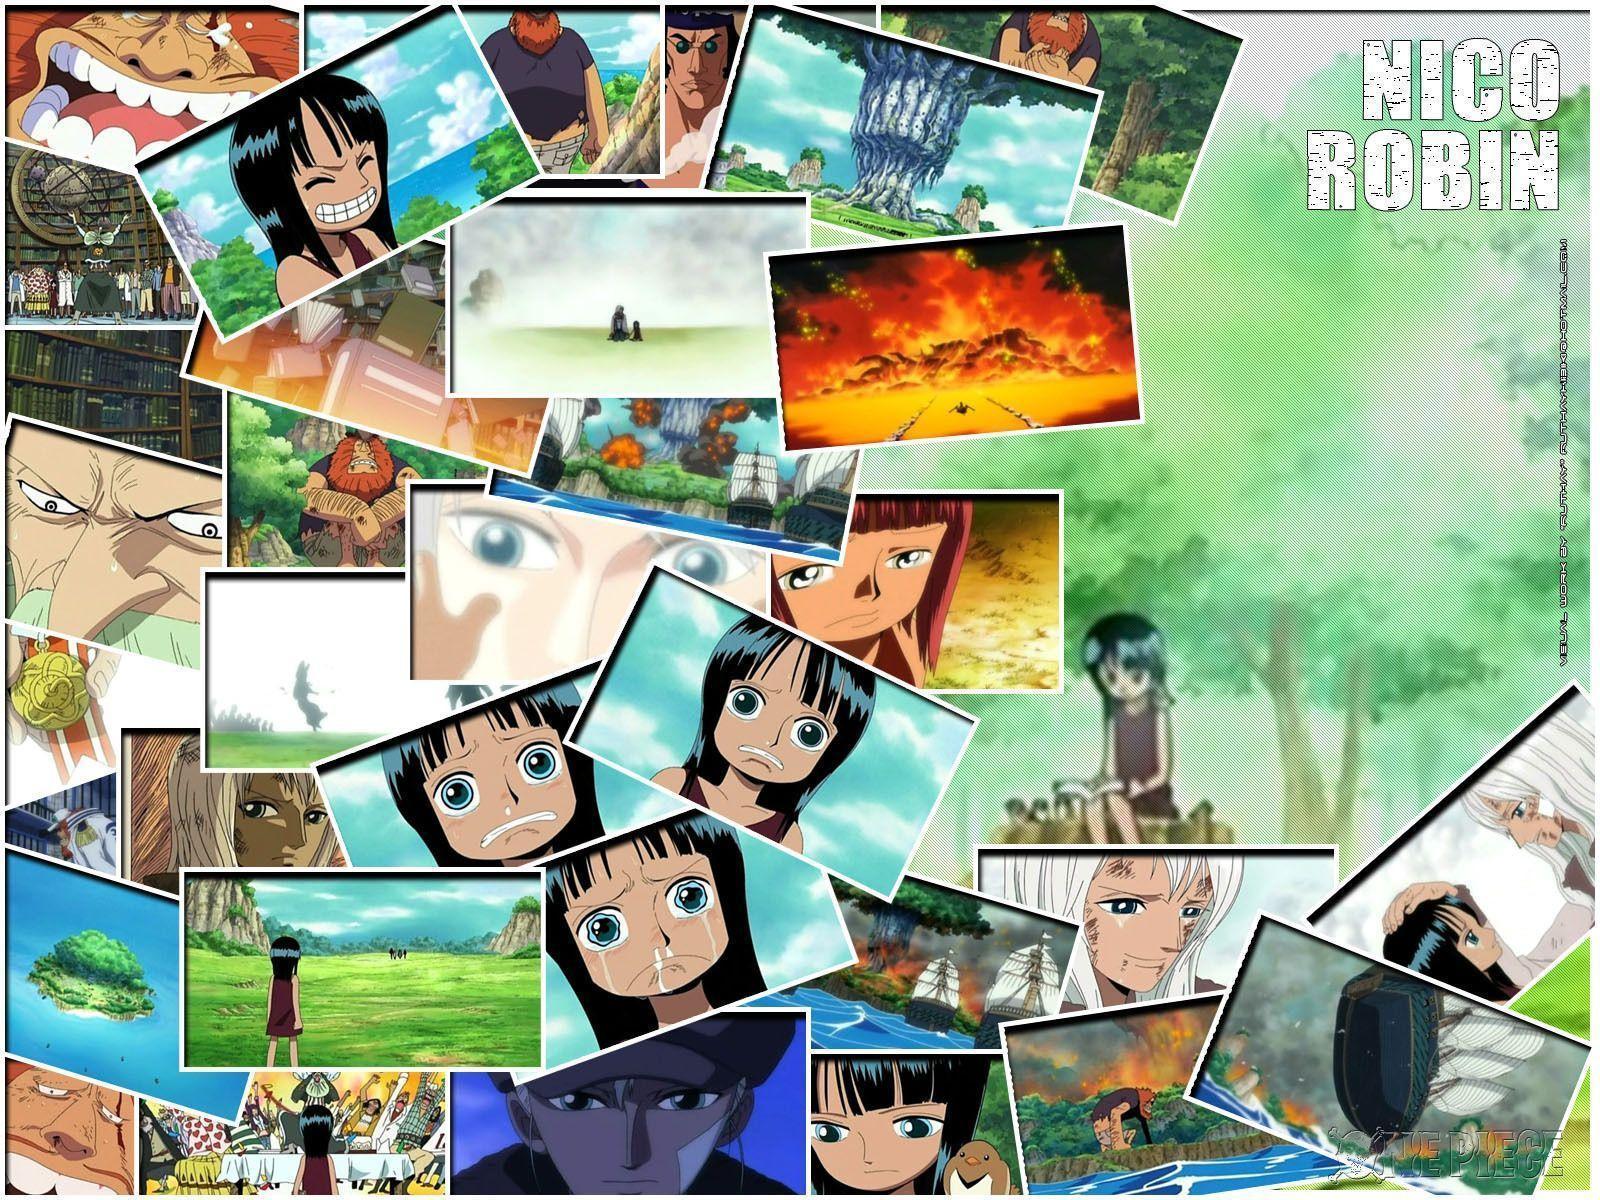 Nico Robin Wallpaper